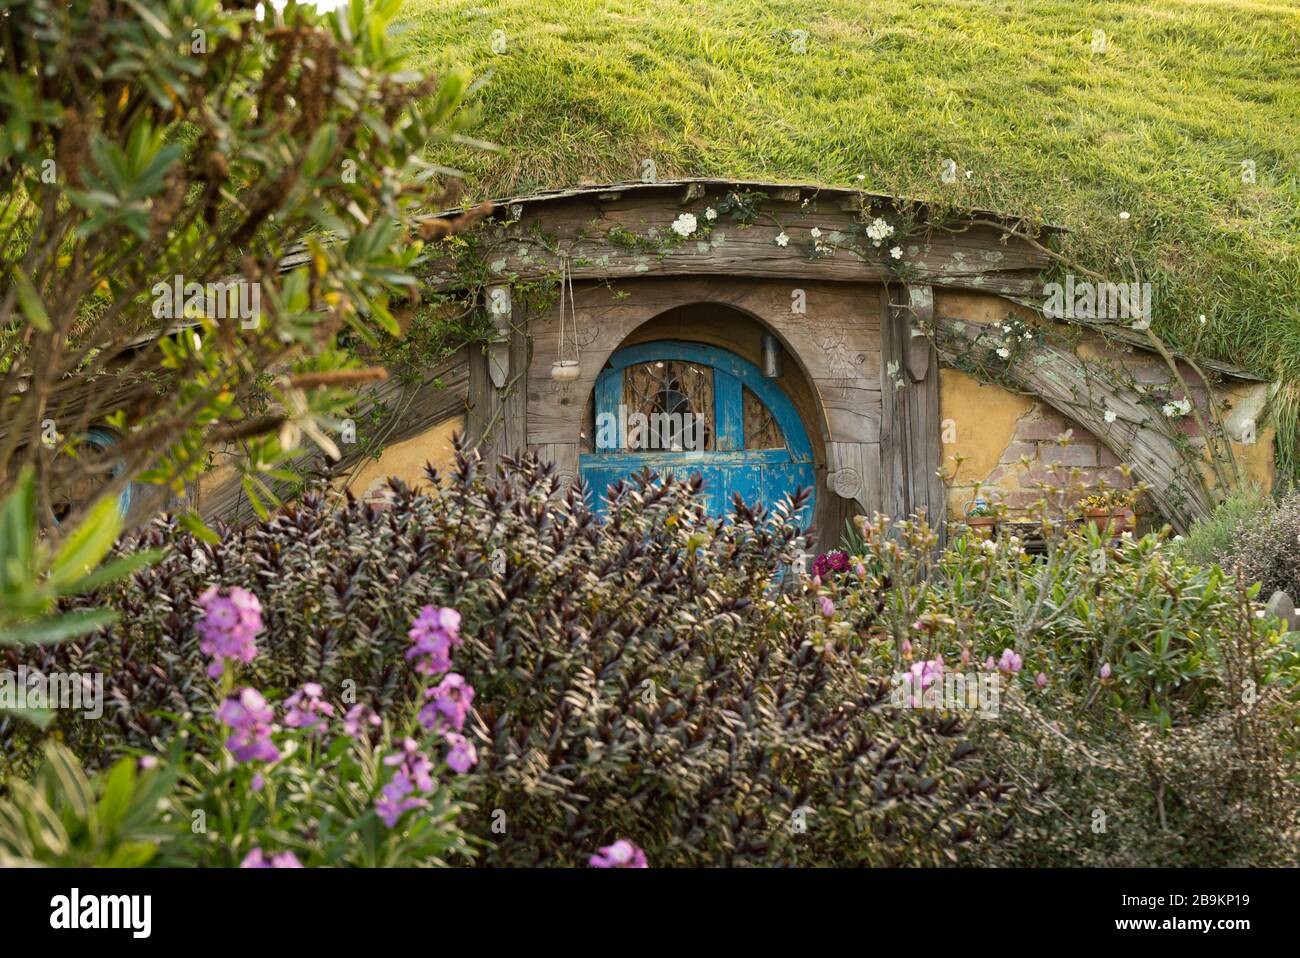 A round, blue door to a hobbit hole at the Hobbiton Movie Set, New Zealand Stock Photo